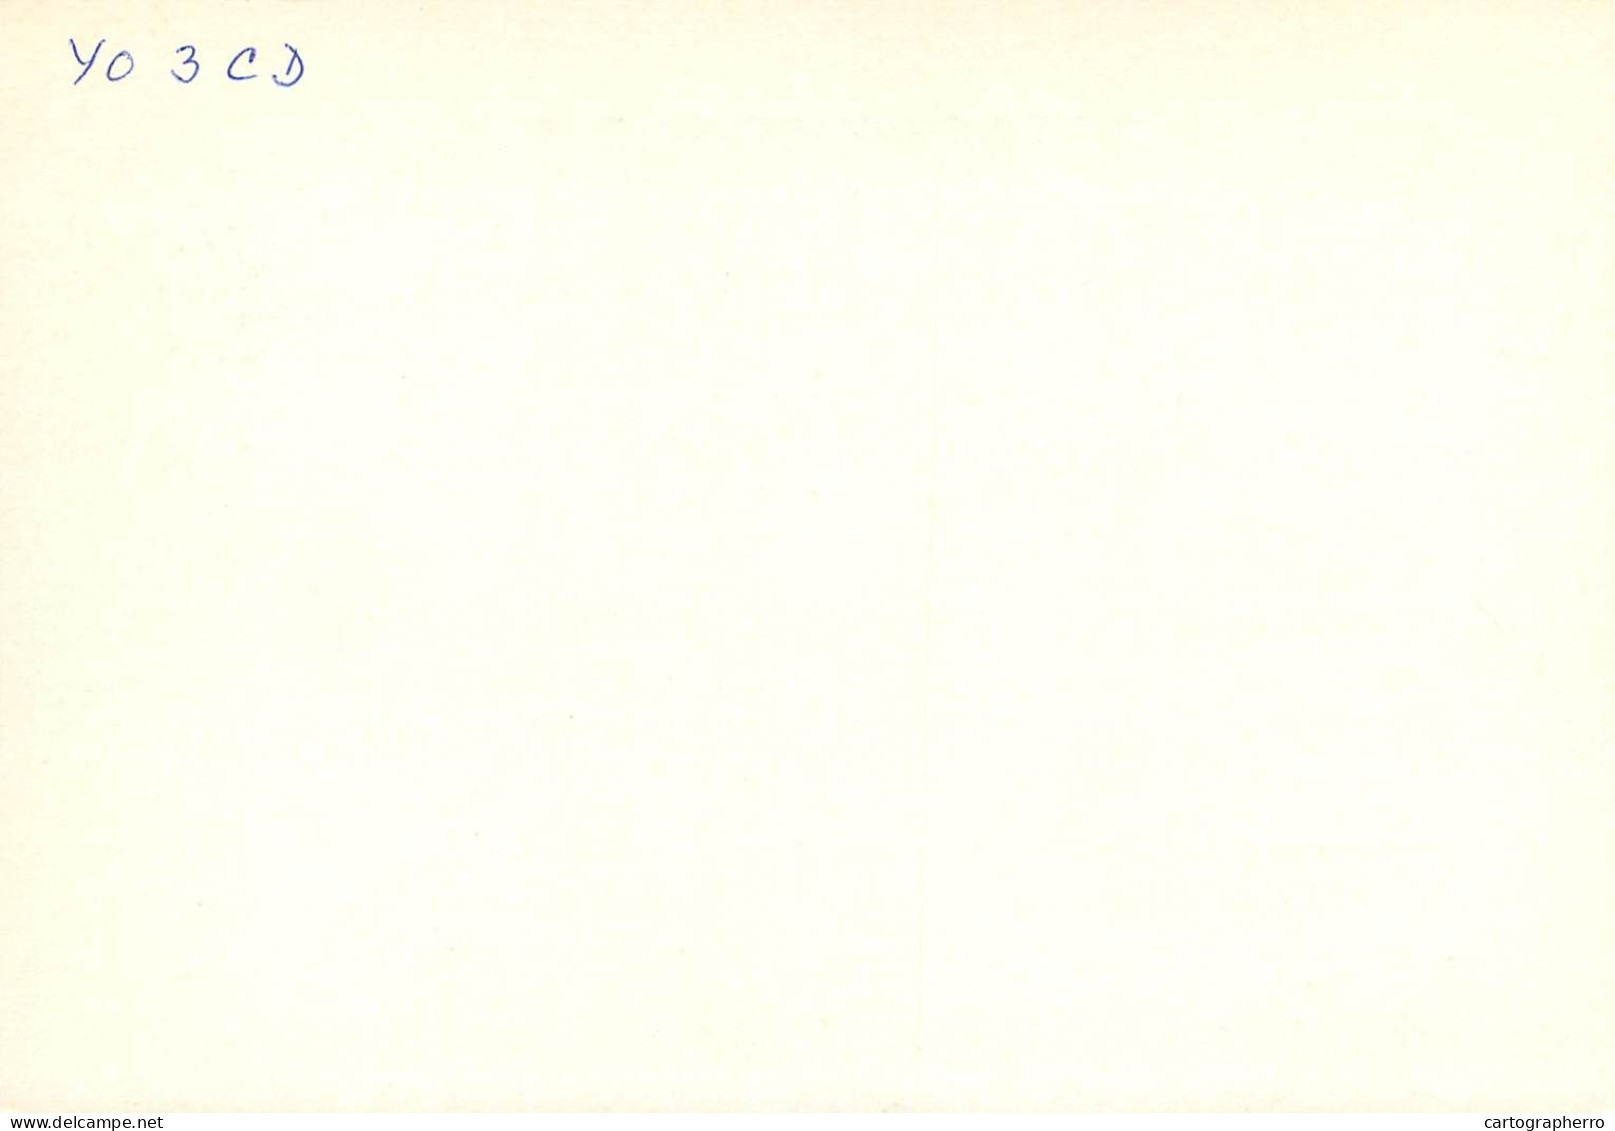 QSL Card Czechoslovakia Radio Amateur Station OK1NR OL5BAH Y03CD 1983 - Amateurfunk